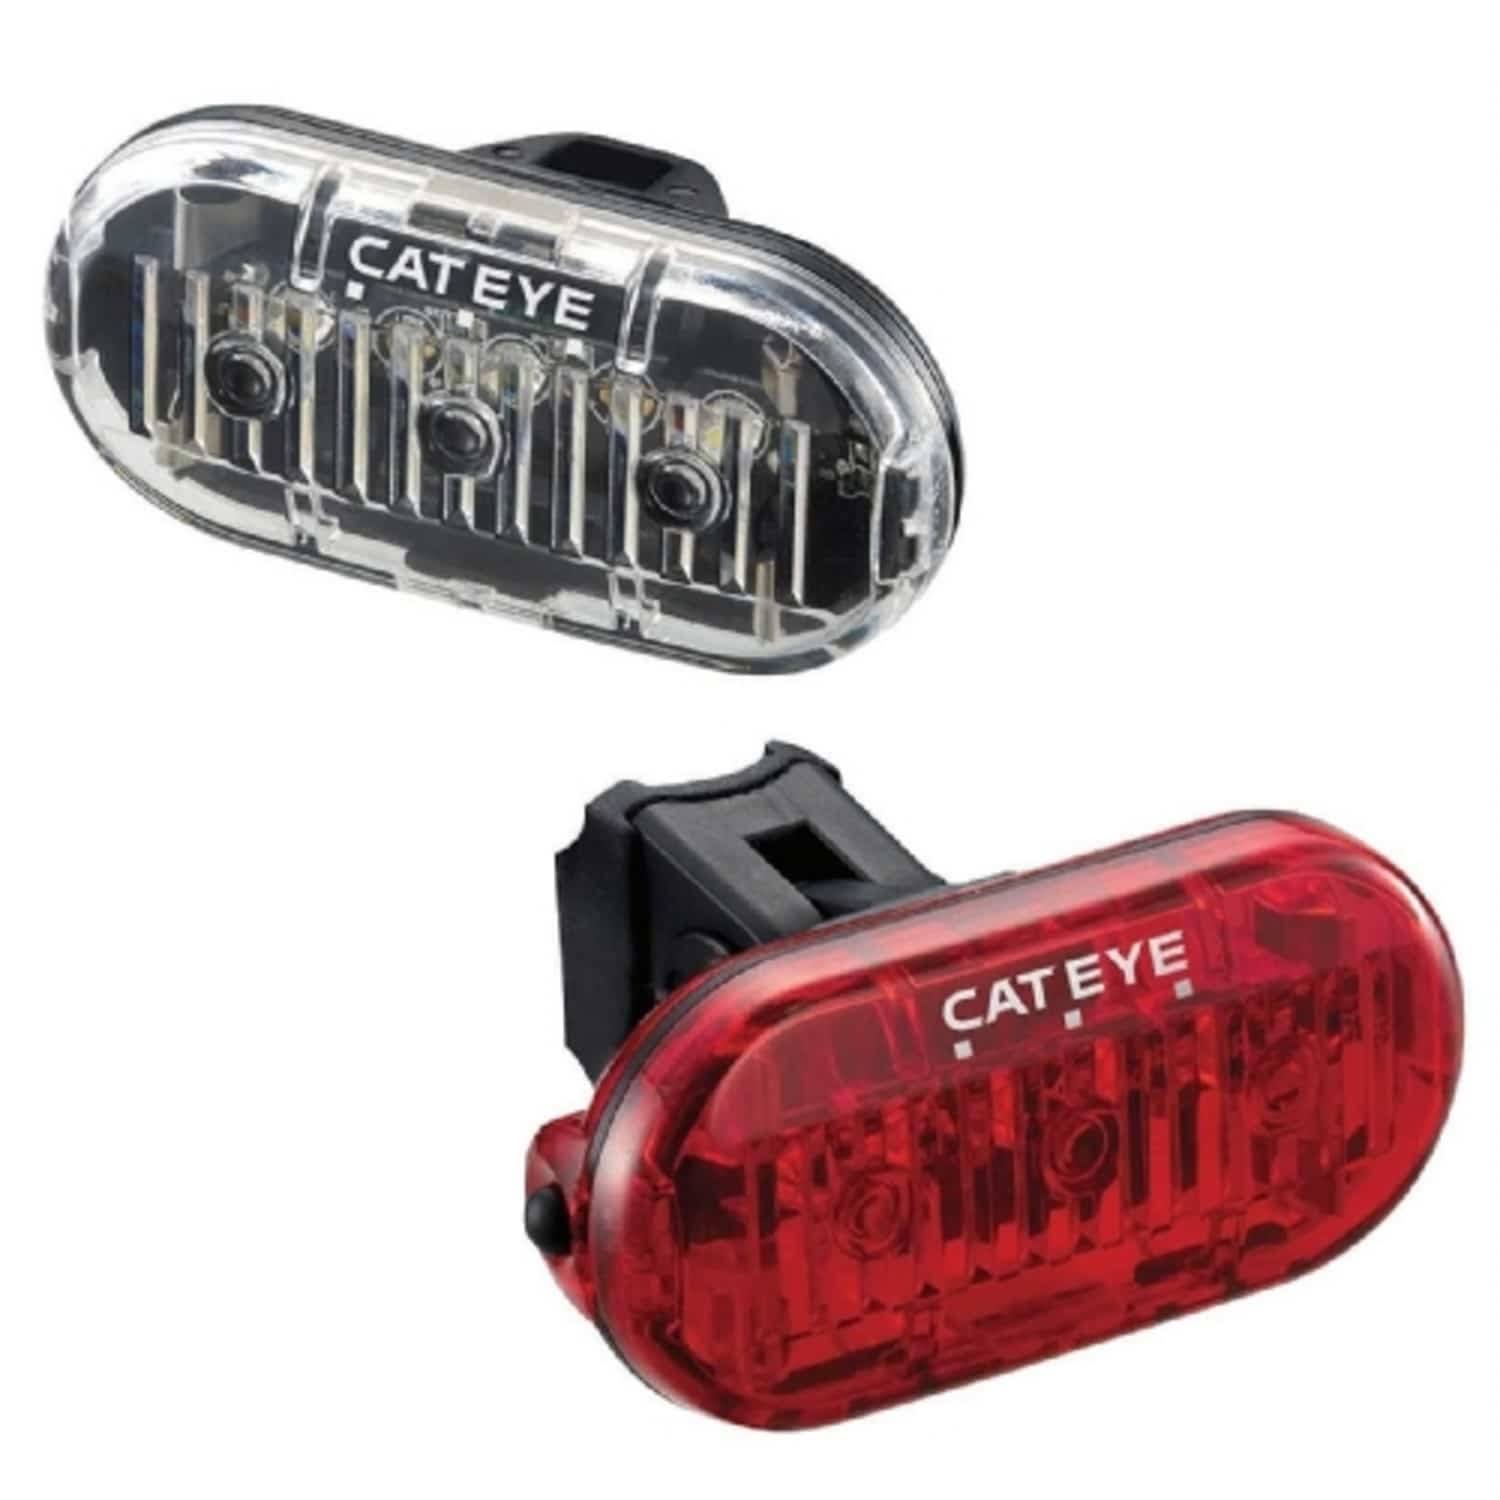 Cateye Omni 3 Bicycle Headlight & Taillight